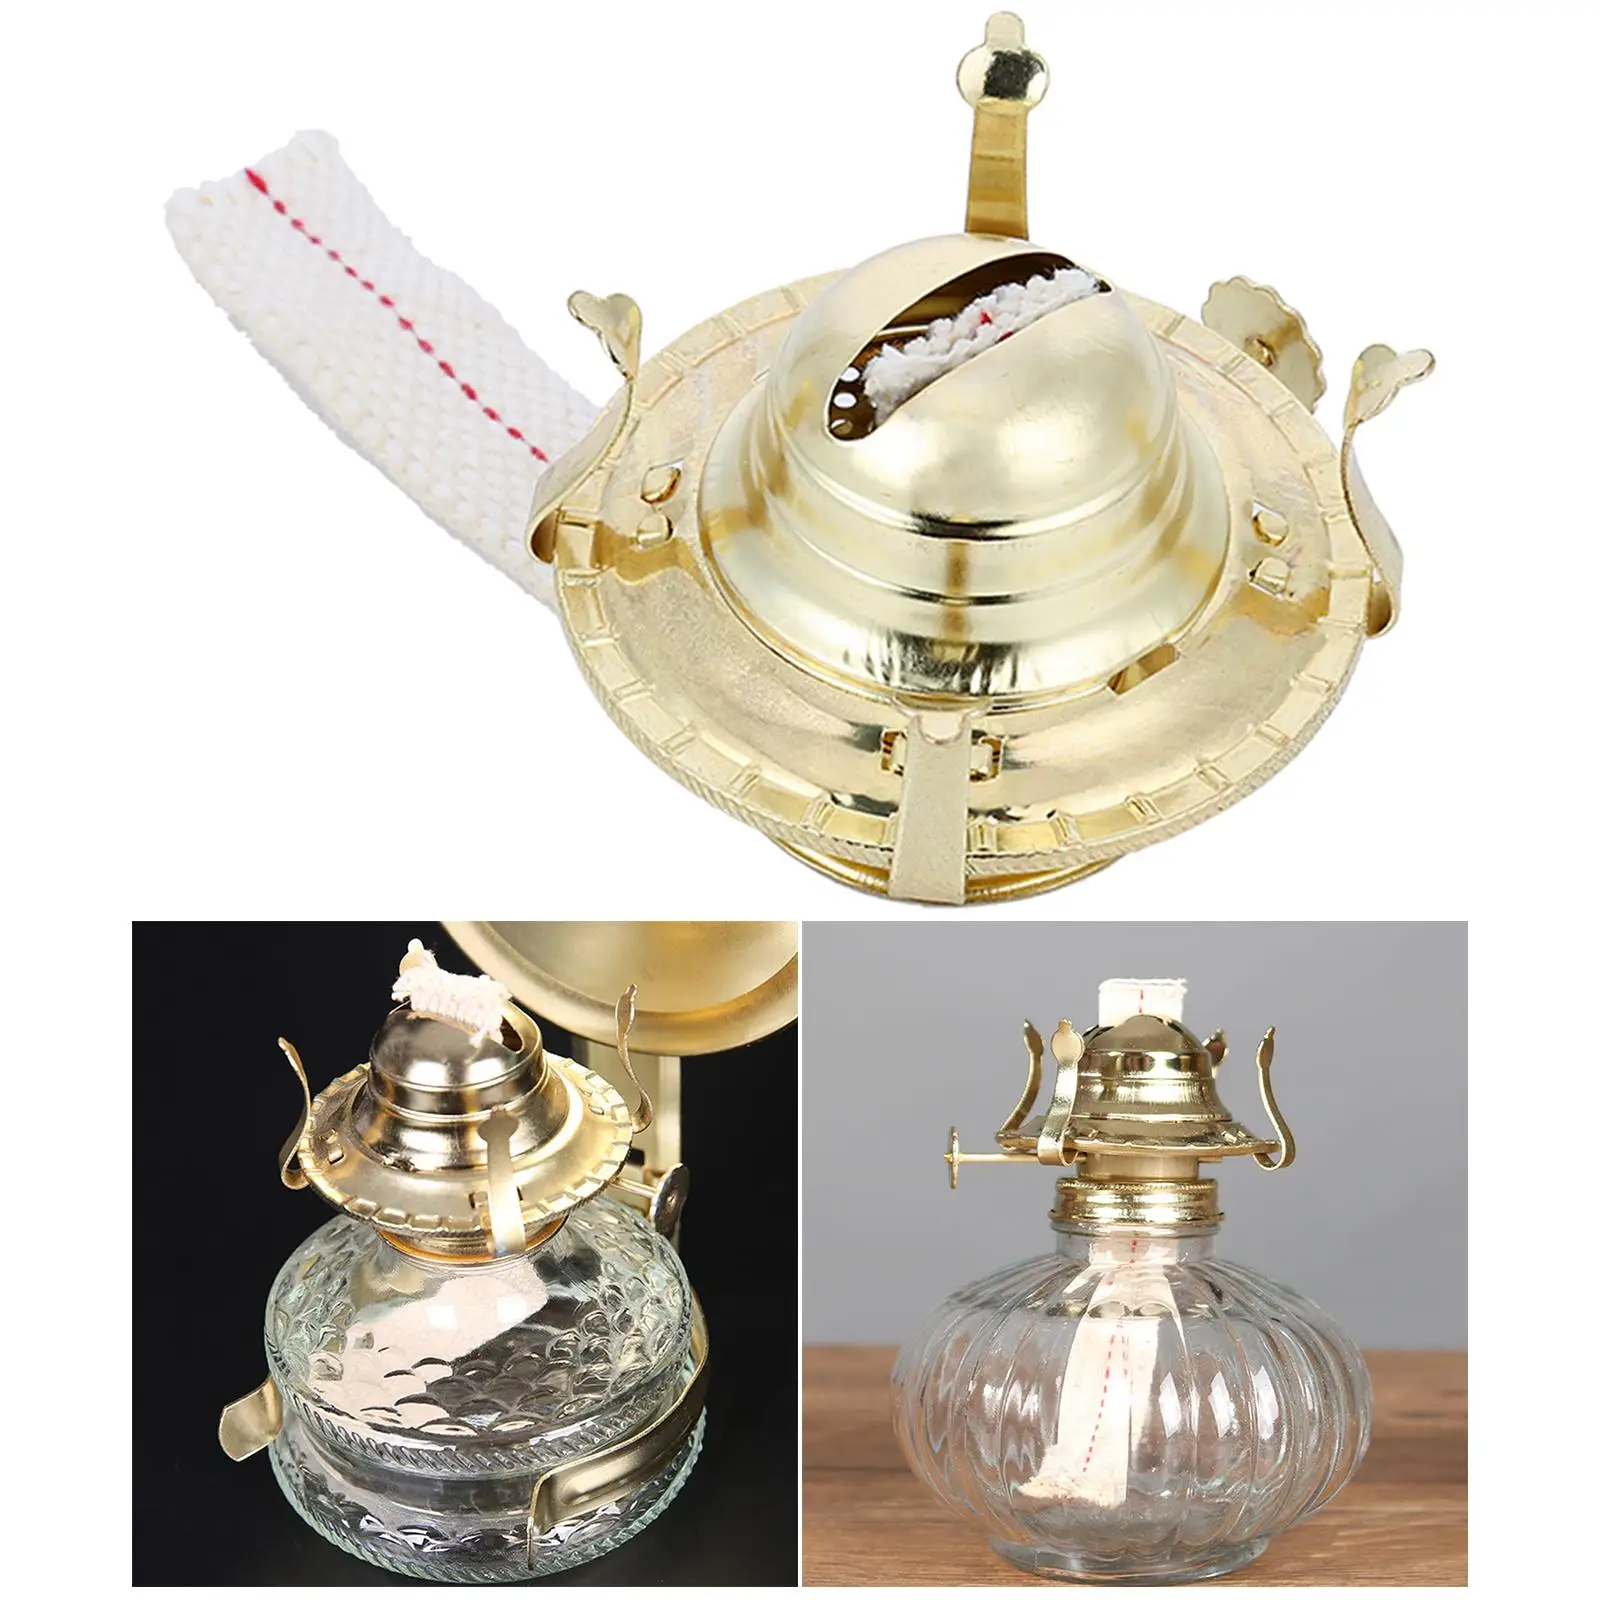  Oil Lamp Part Indoor Use, Oil Lamp Replacement Burner    Lamps, Transparent Glass Oil Lantern,Desktop Oil Lamps